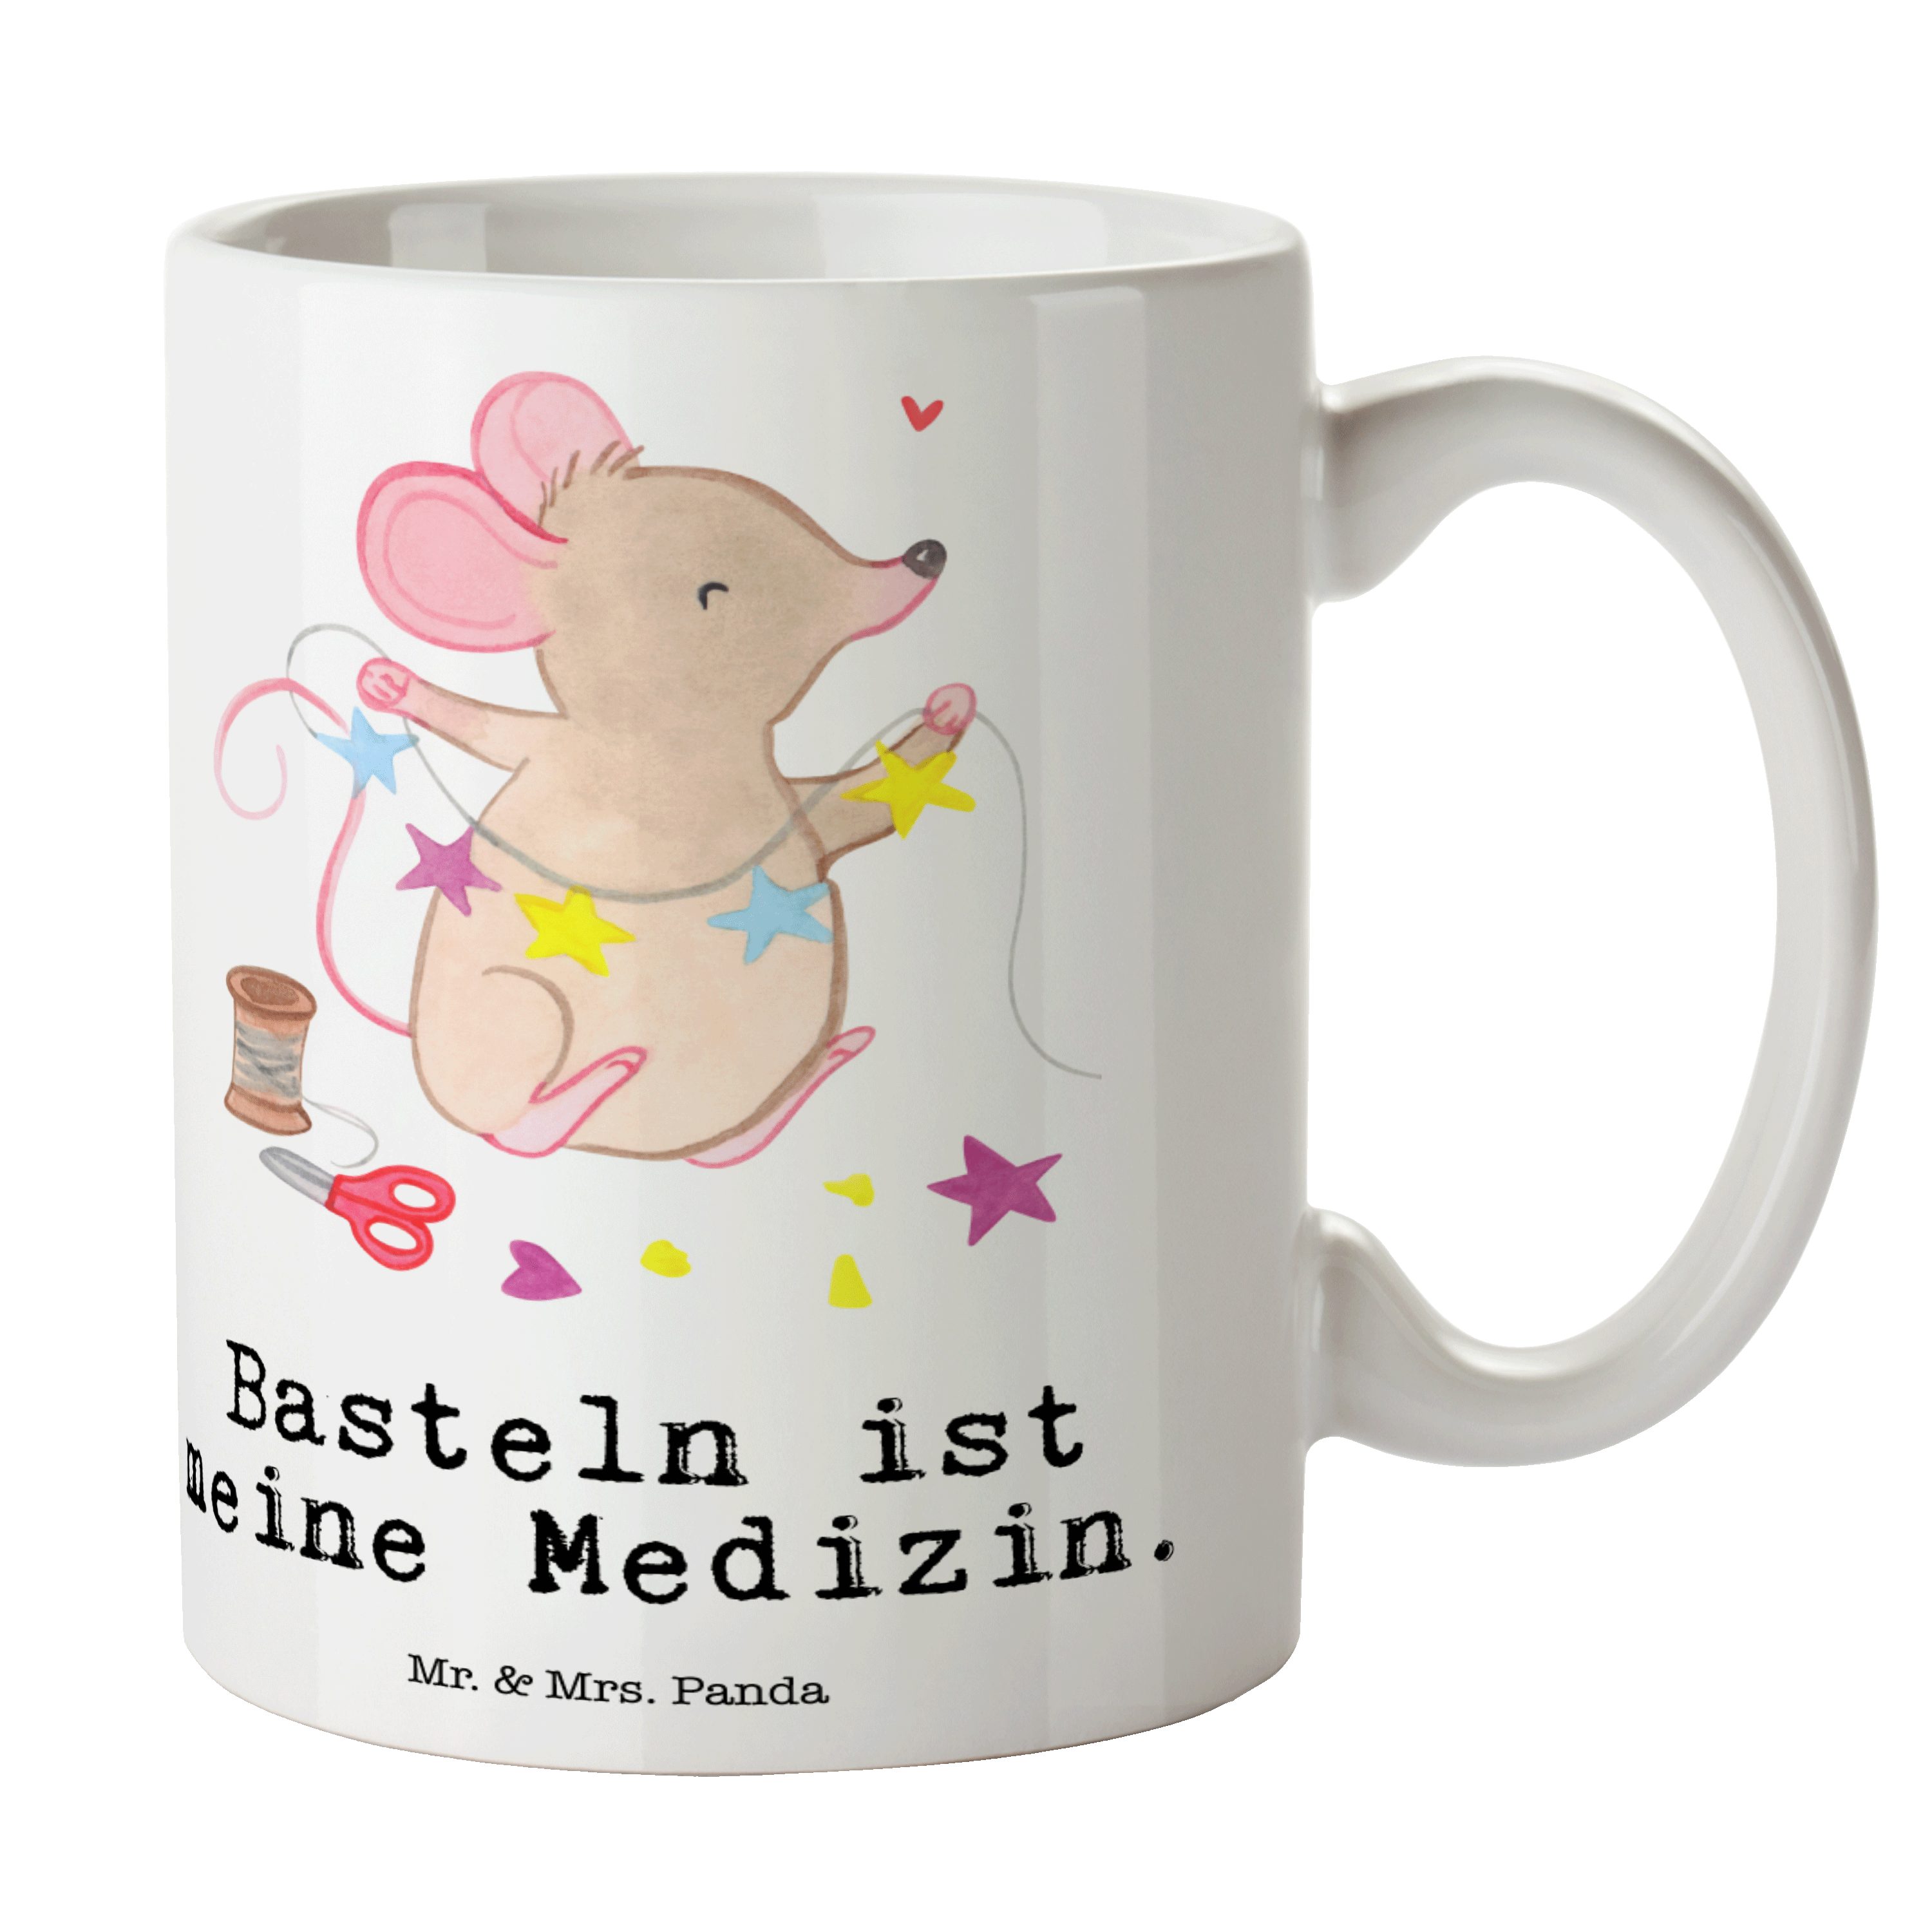 Mr. & Mrs. Panda Tasse Weiß - Basteln Keramik - Tasse, Maus DIY, Medizin Geschenk, K, Porzellantasse